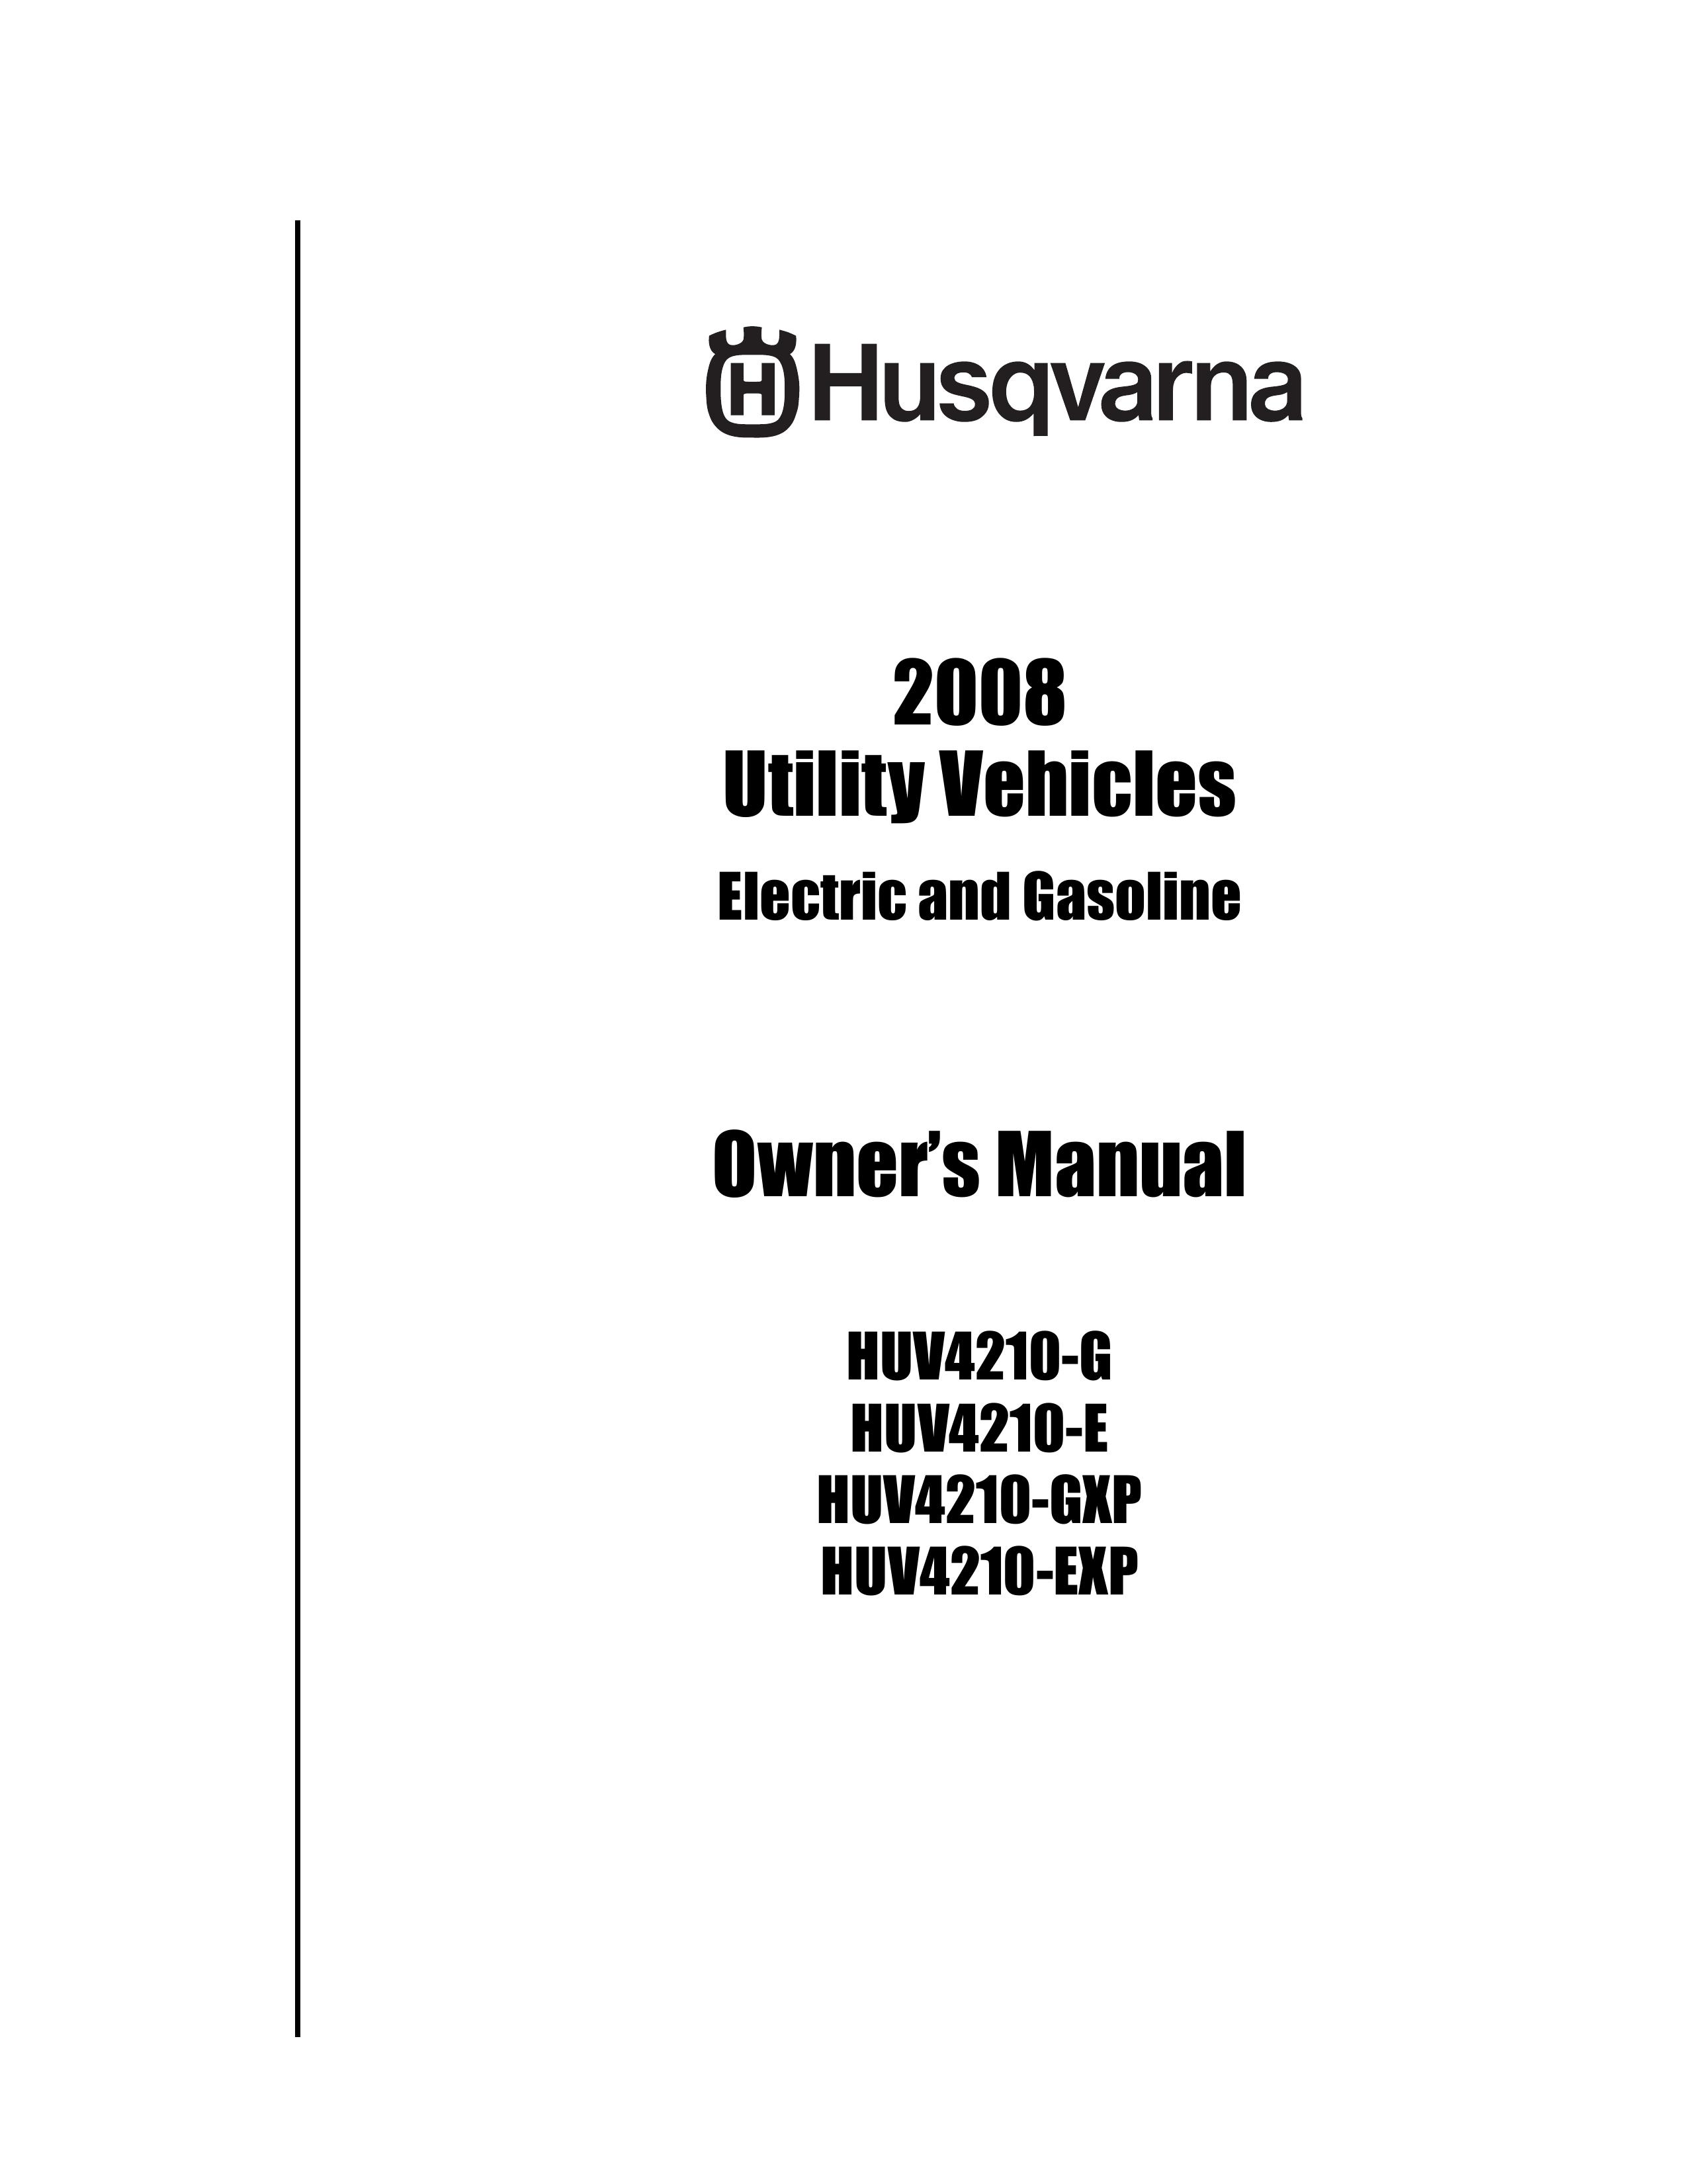 Husqvarna HUV4210-E Utility Vehicle User Manual